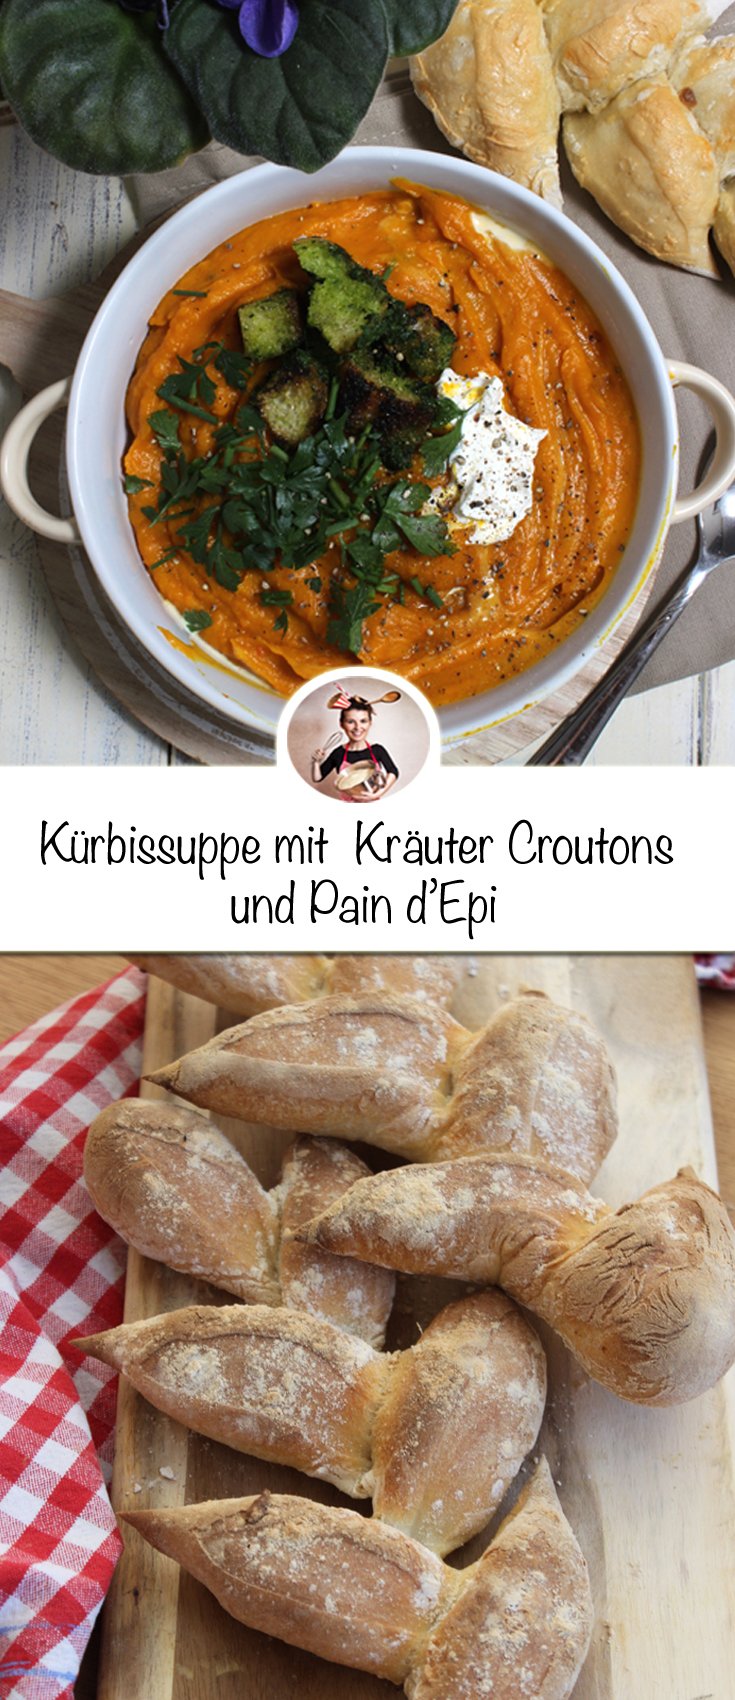 Img_kürbissuppe-mit-knusprigen-kräuter-croutons-tl. Jpg